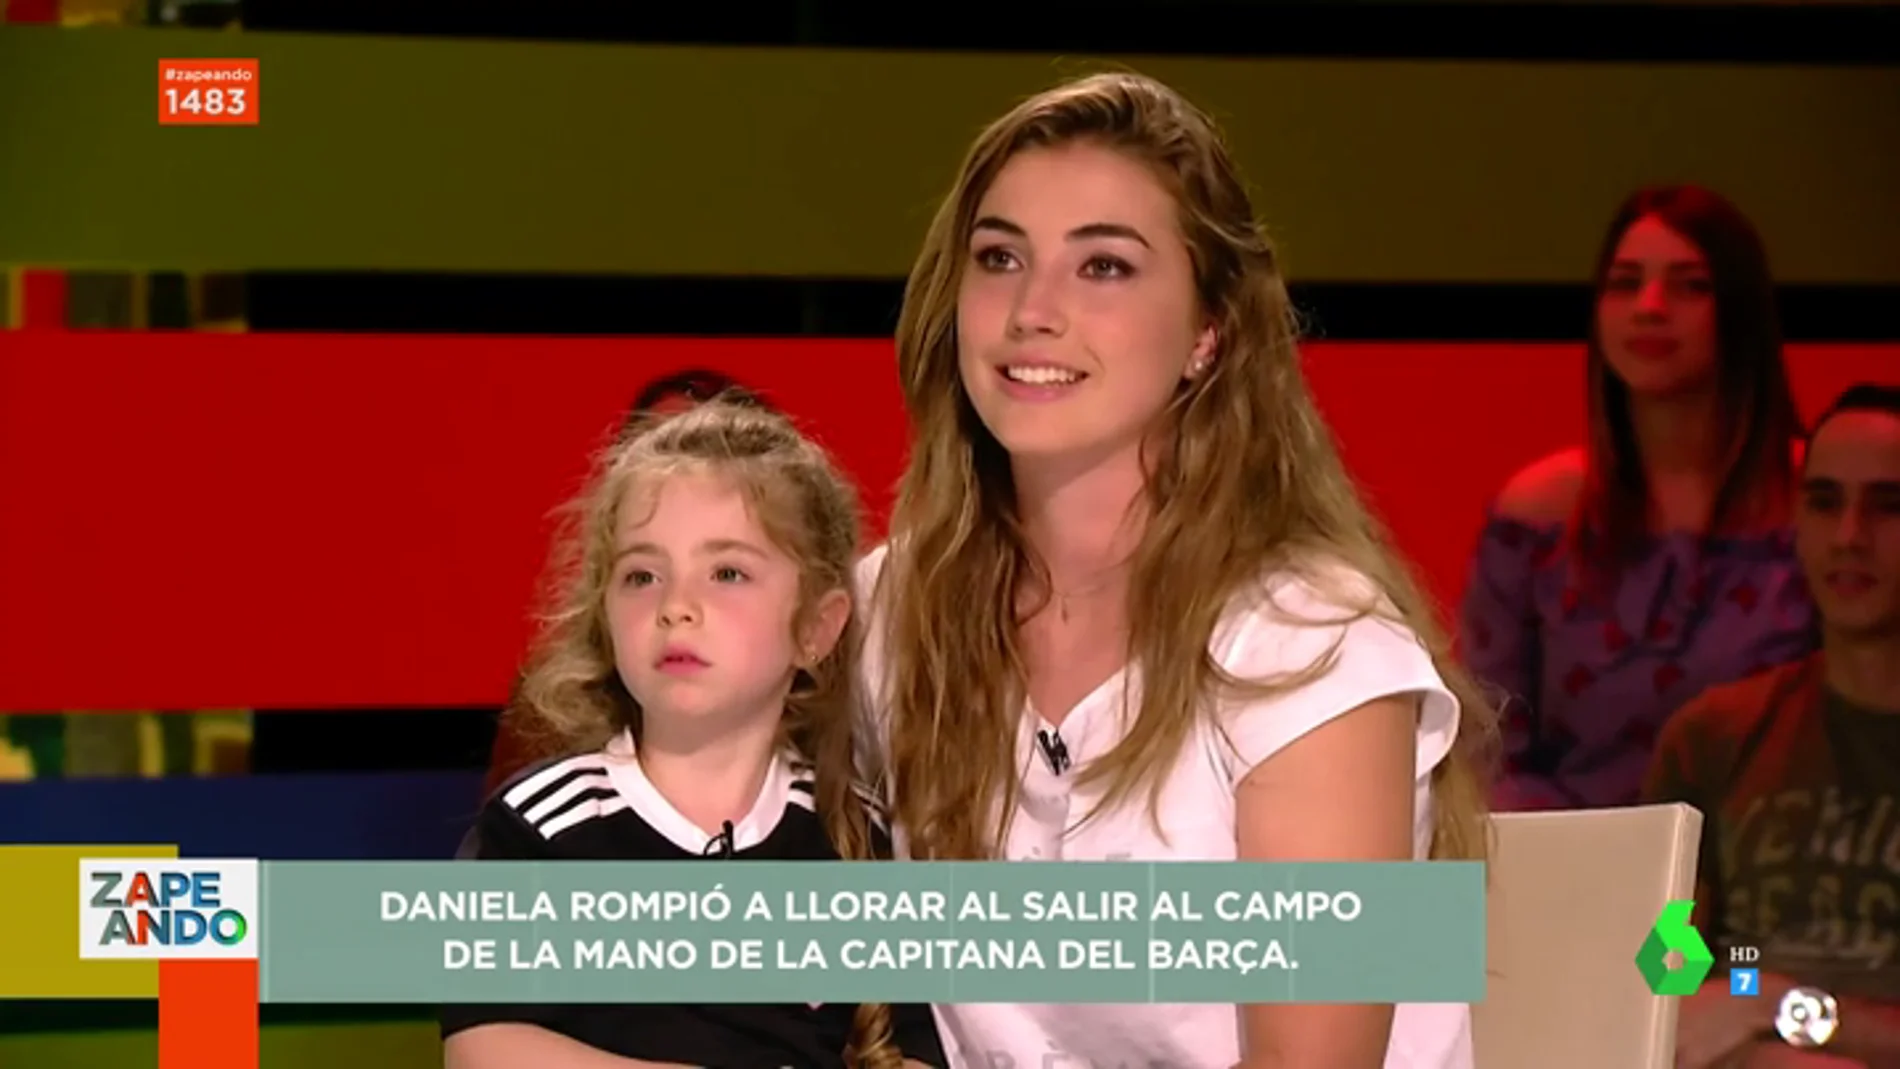 El alegato feminista de la futbolista Laura Teruel